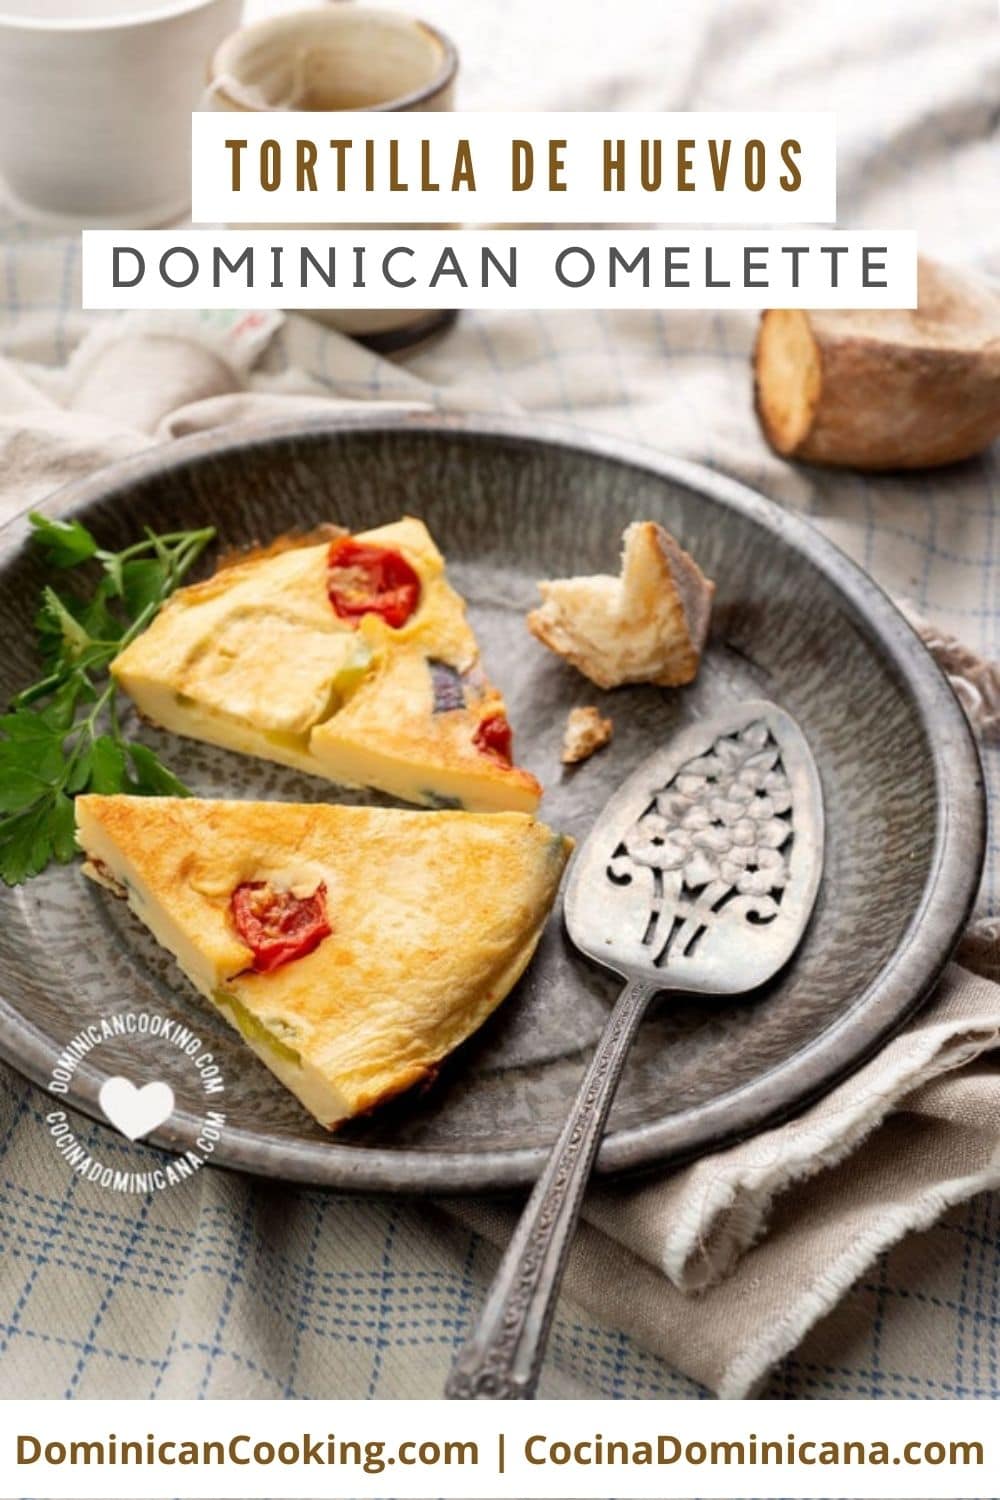 Tortilla de huevos (Dominican omelette) recipe.